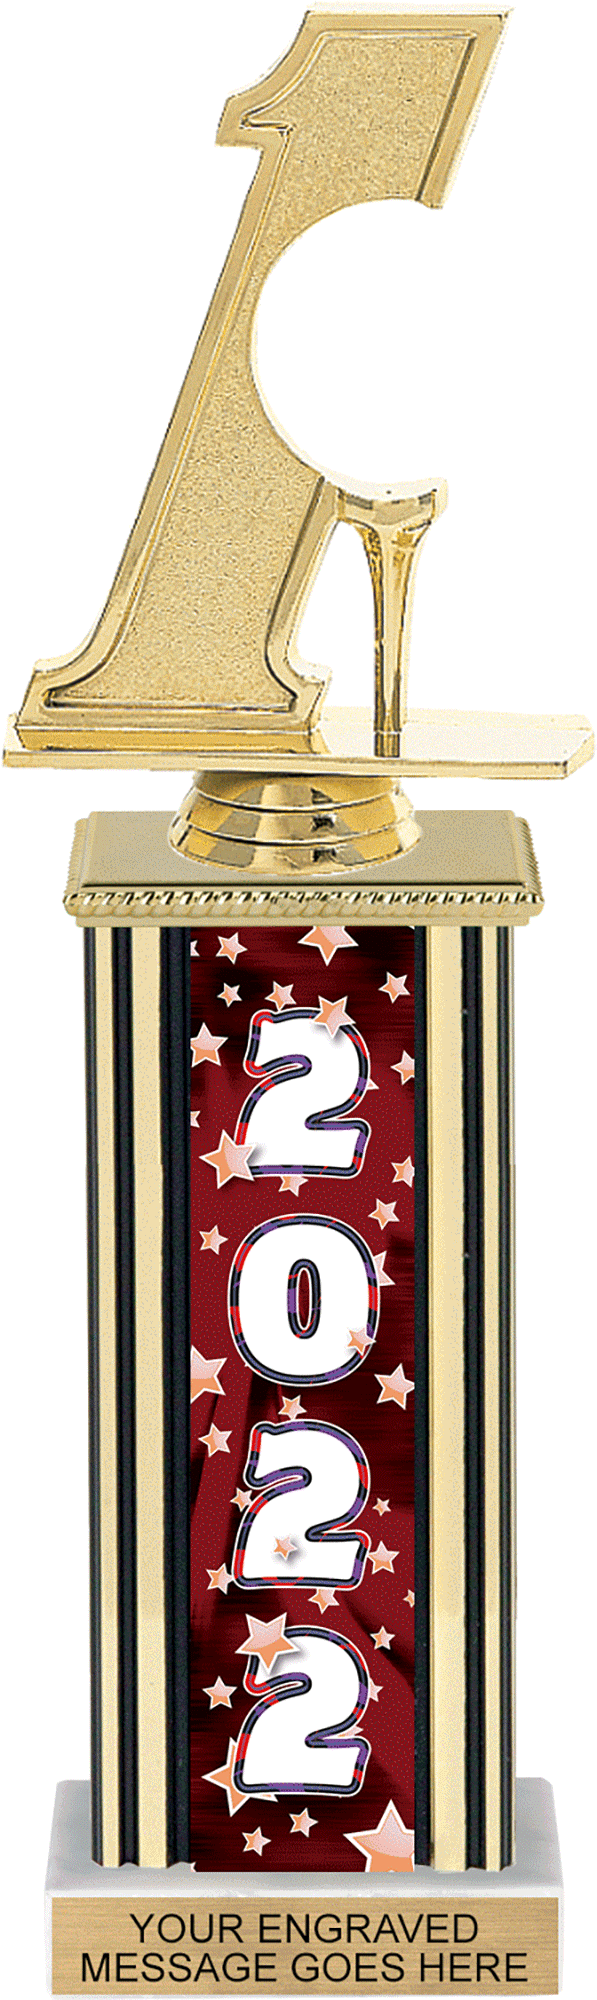 Year Glowing Stars Rectangle Column Trophy - Maroon 12 inch